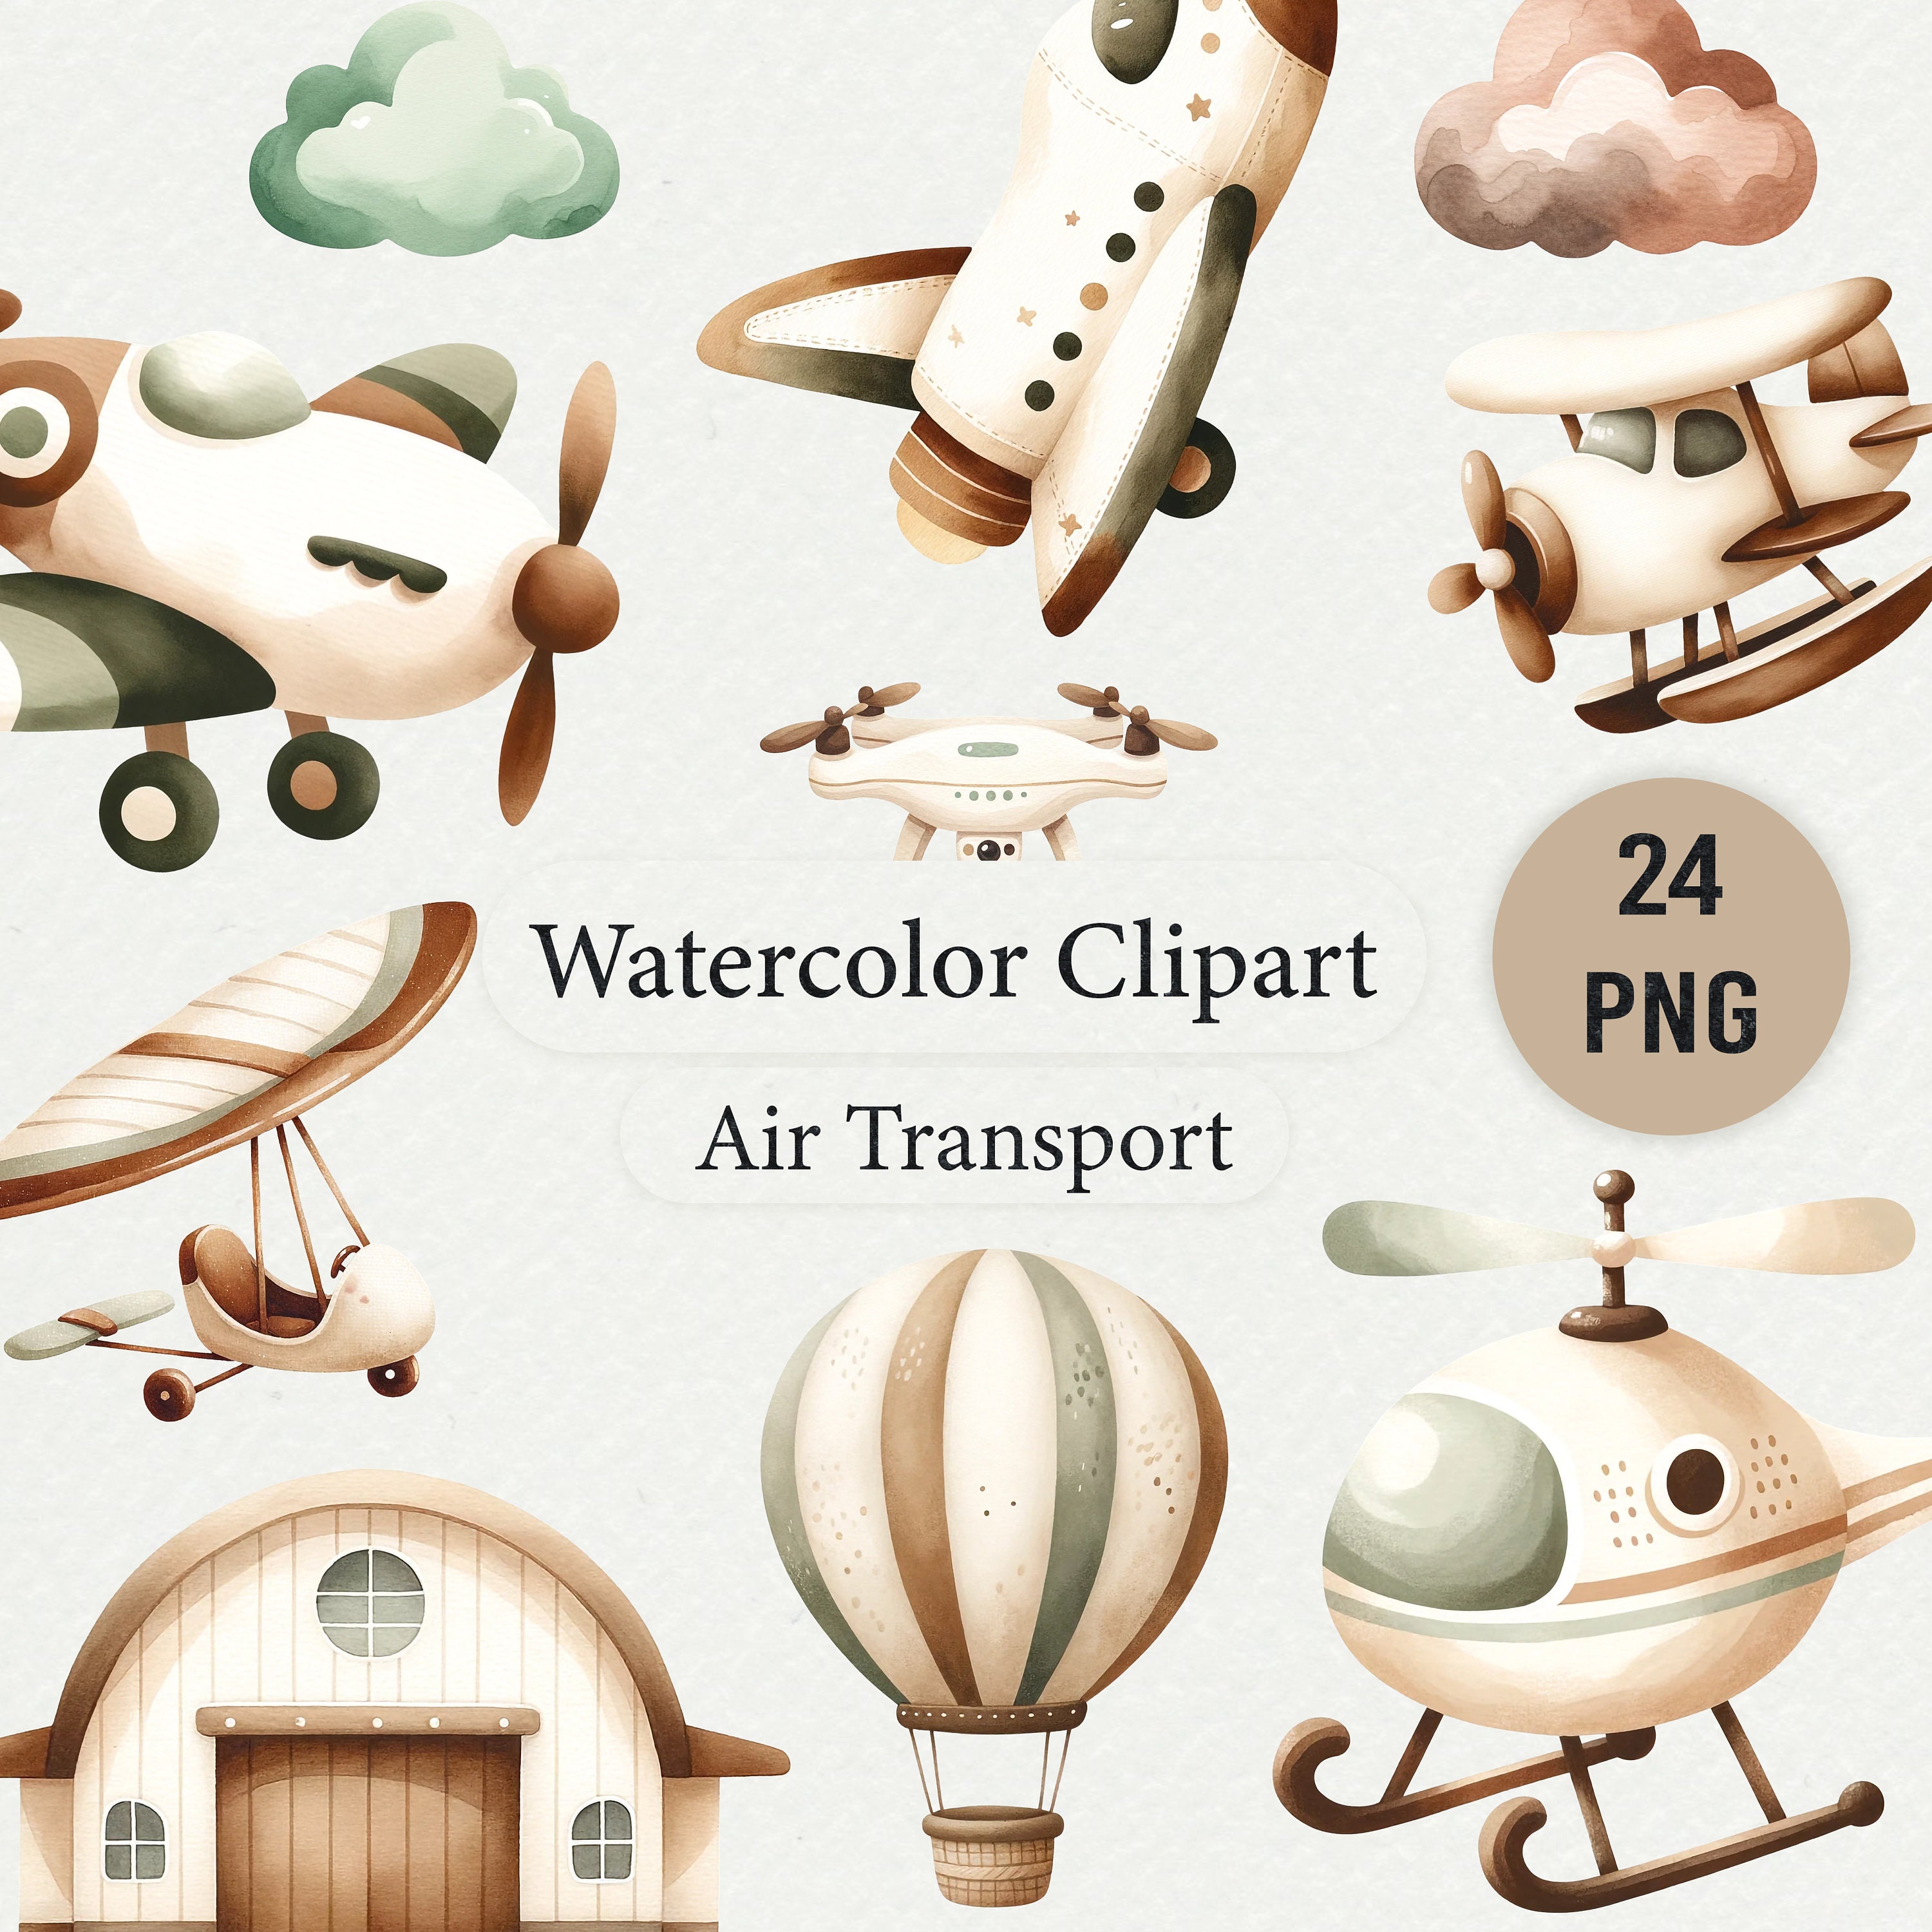 Cute Watercolor Travel Clipart Graphic by DizzyArtStudio